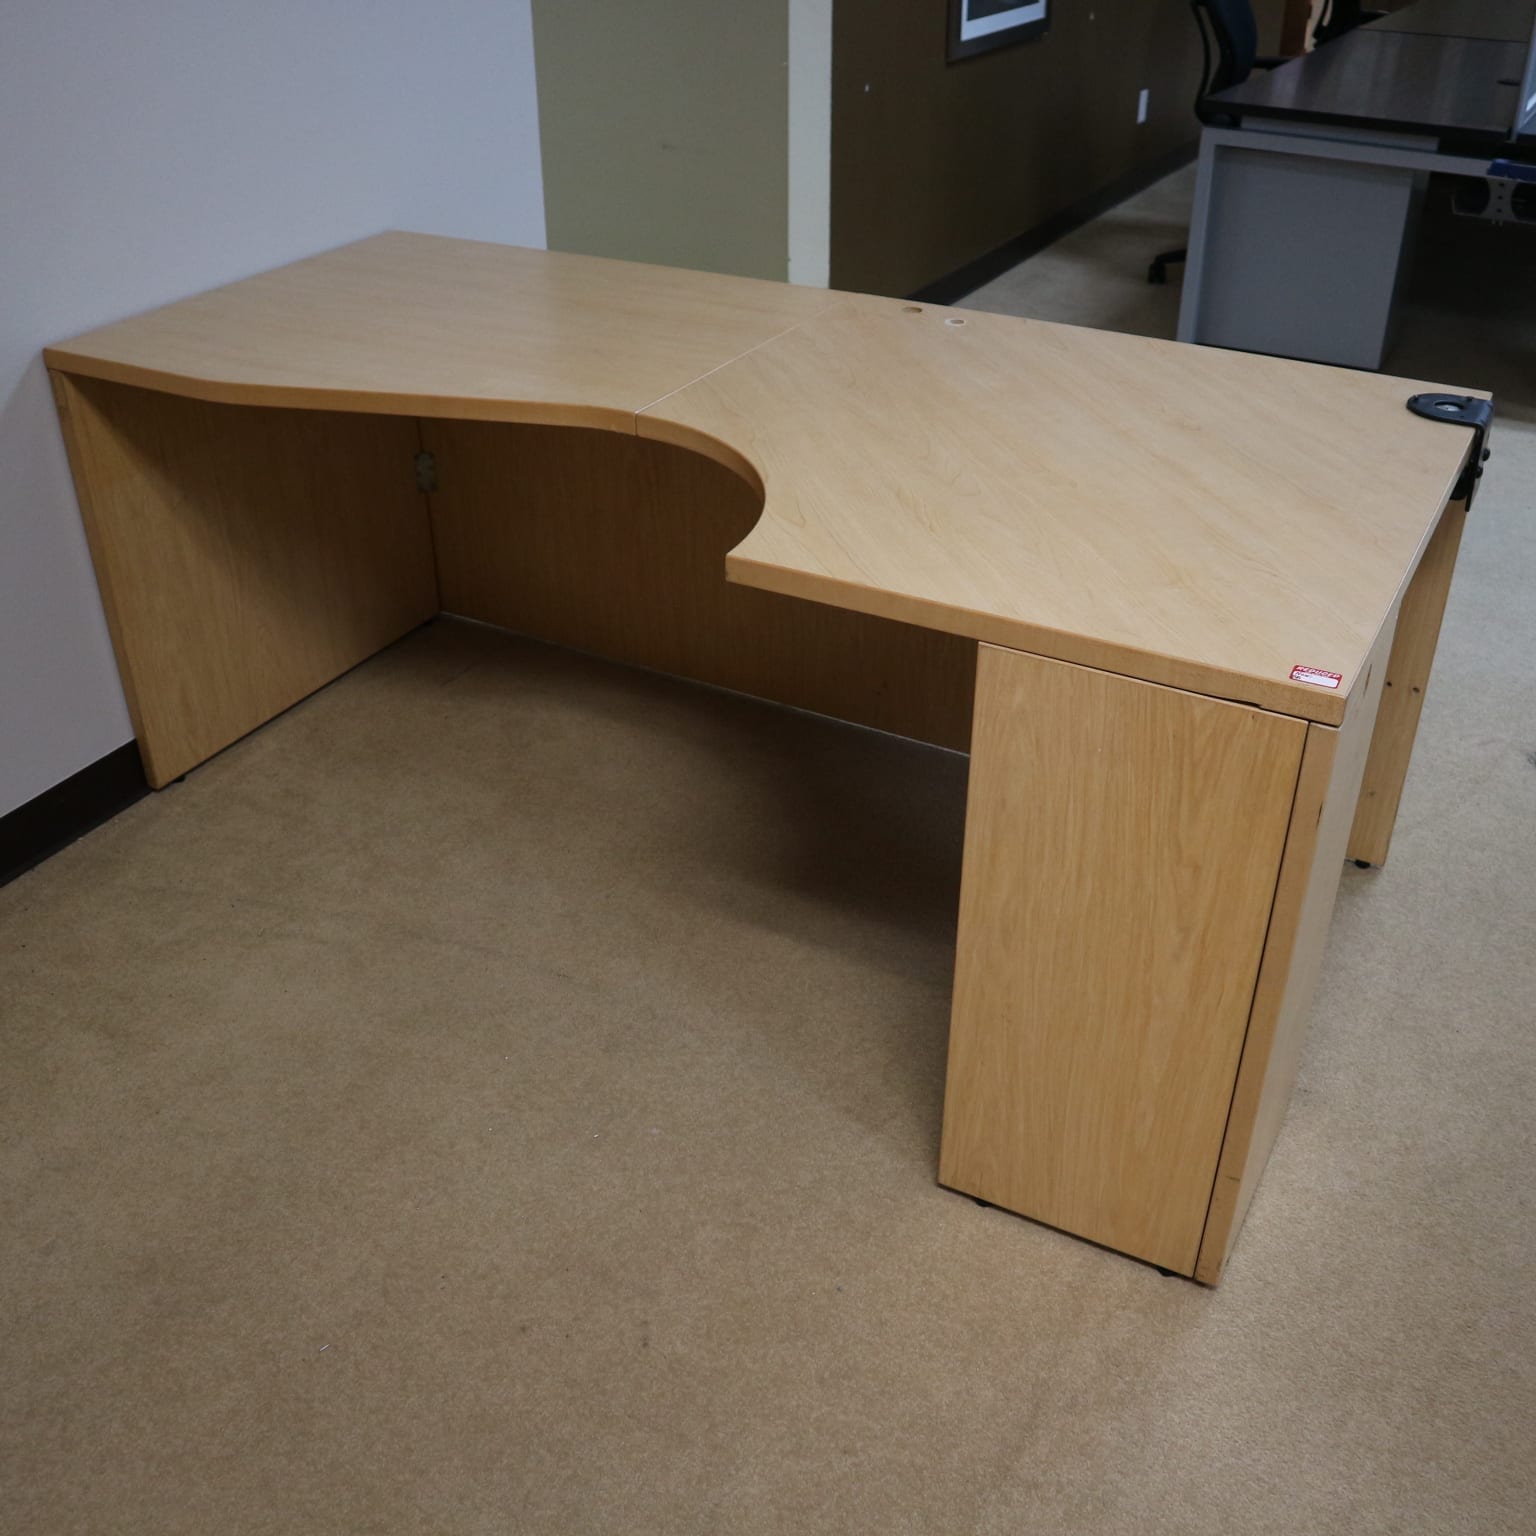 Knoll Desk1 